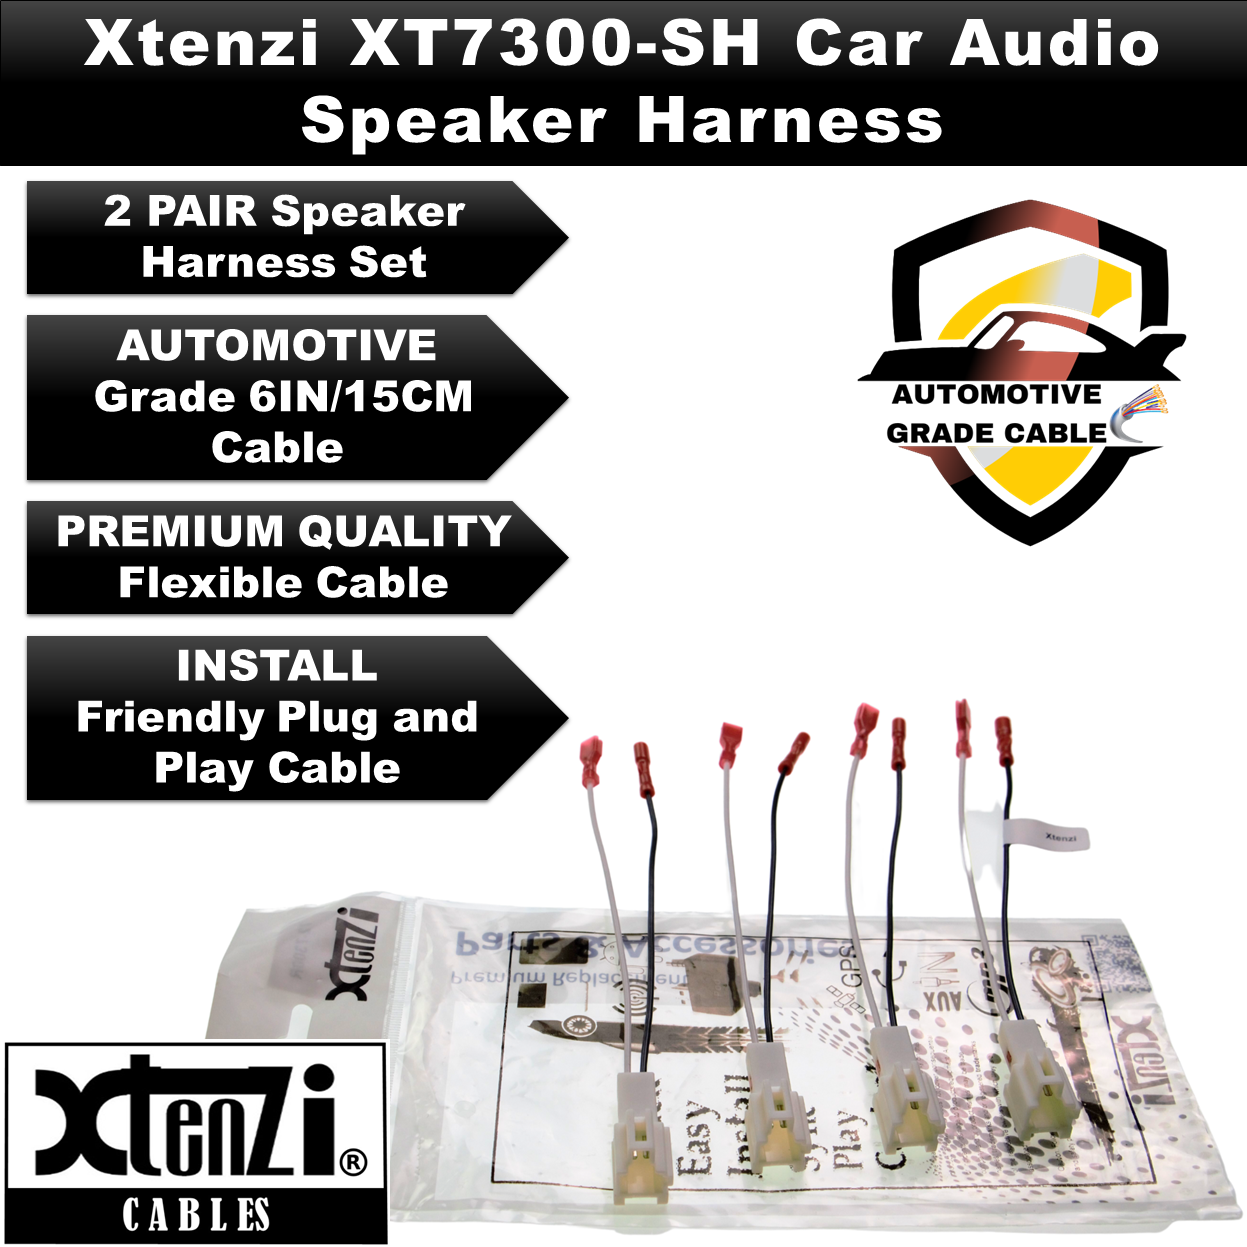 Xtenzi 2 Pair Car Audio Speaker Harness Set for Chevrolet, Hyundai, Kia Vehicles